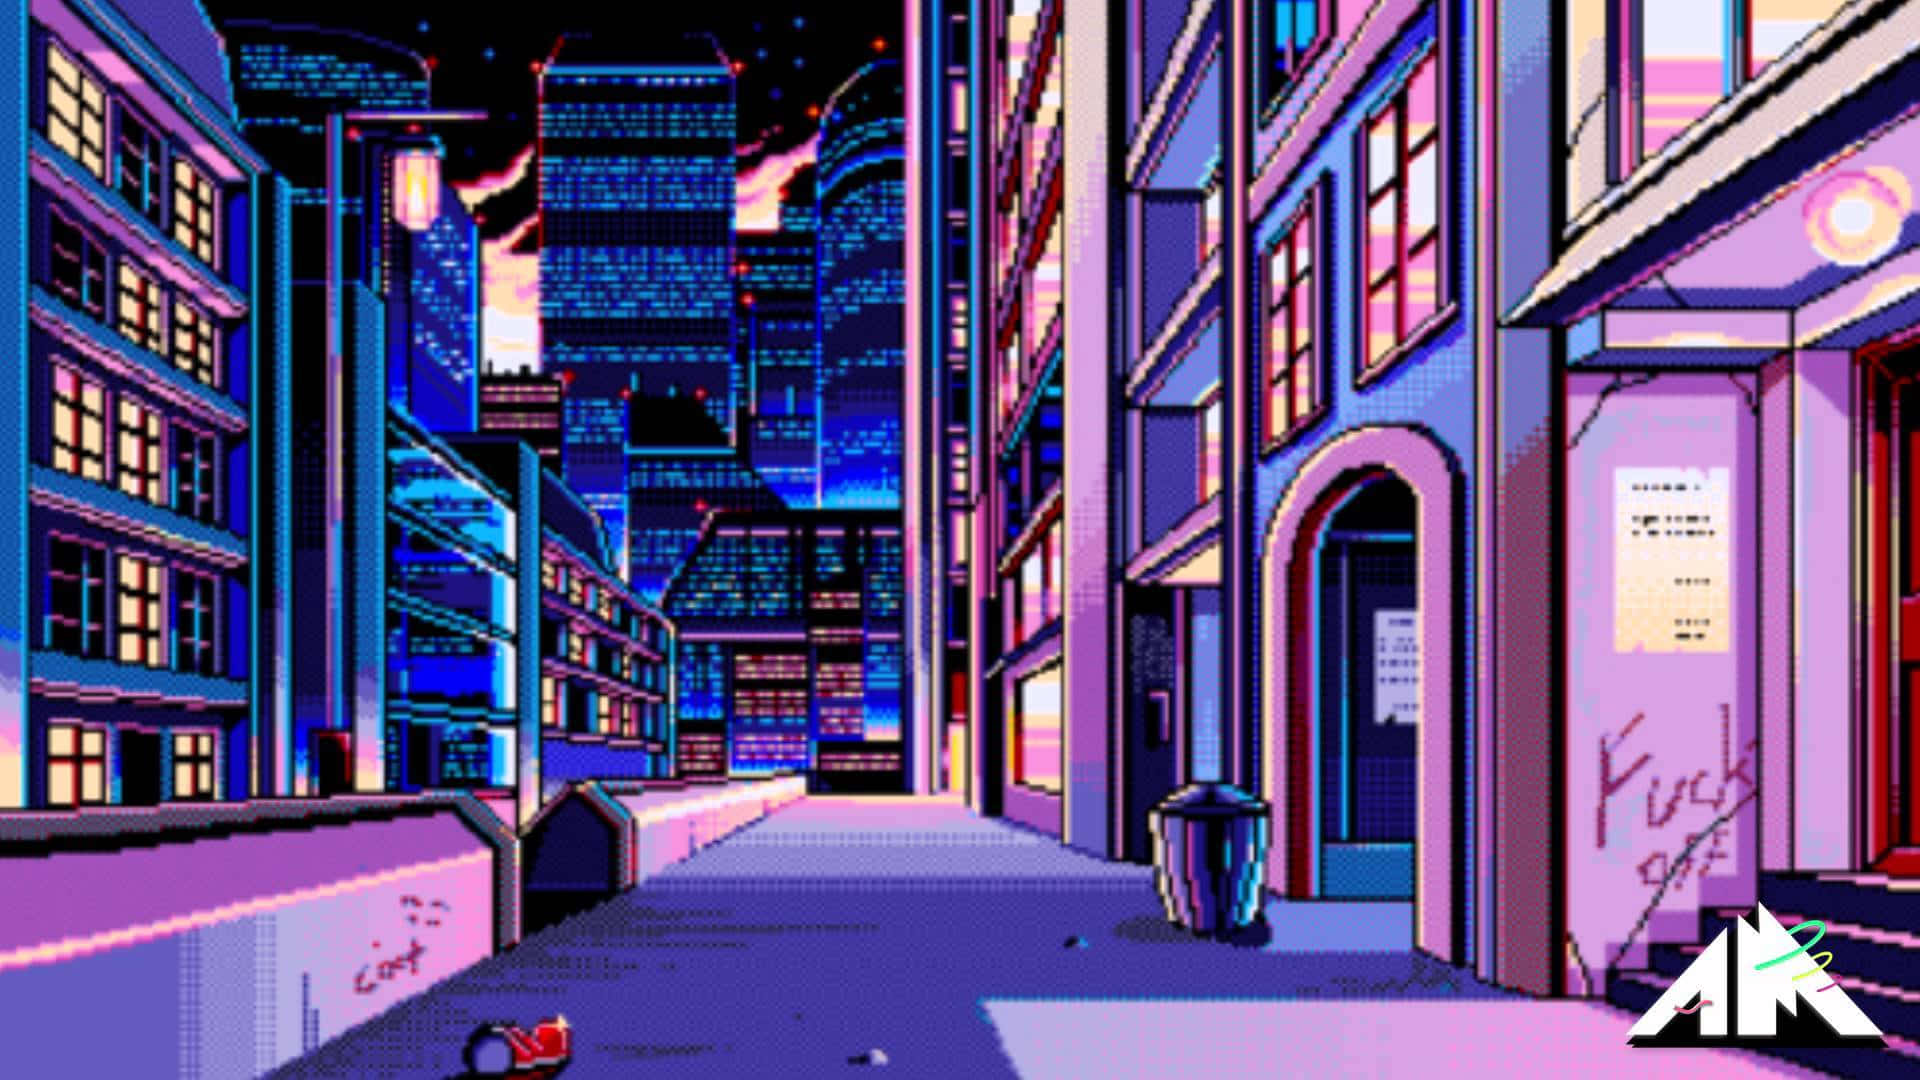 A Pixel Art Illustration Of A City At Night Wallpaper